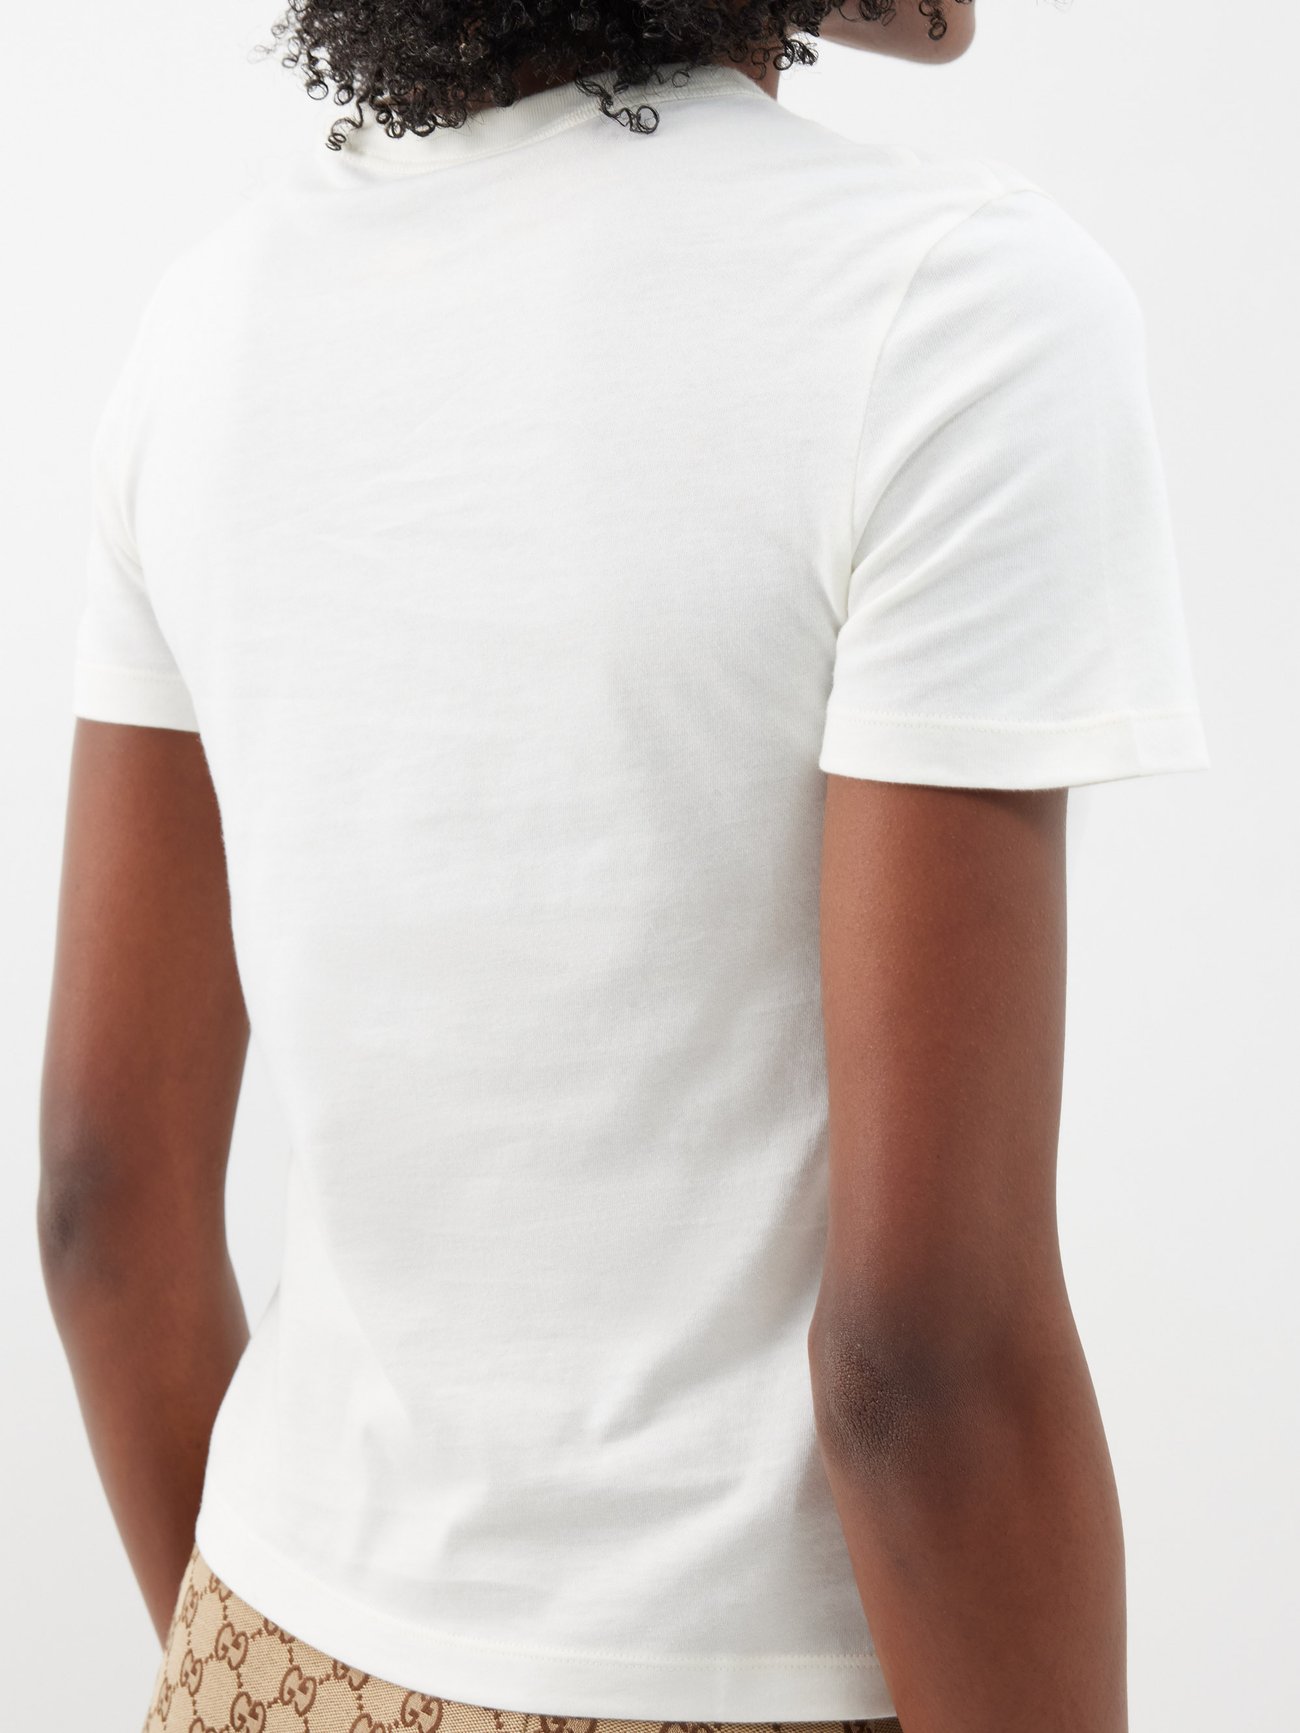 Gucci, Interlocking G Printed Cotton T-Shirt, Women, White, S, Tops